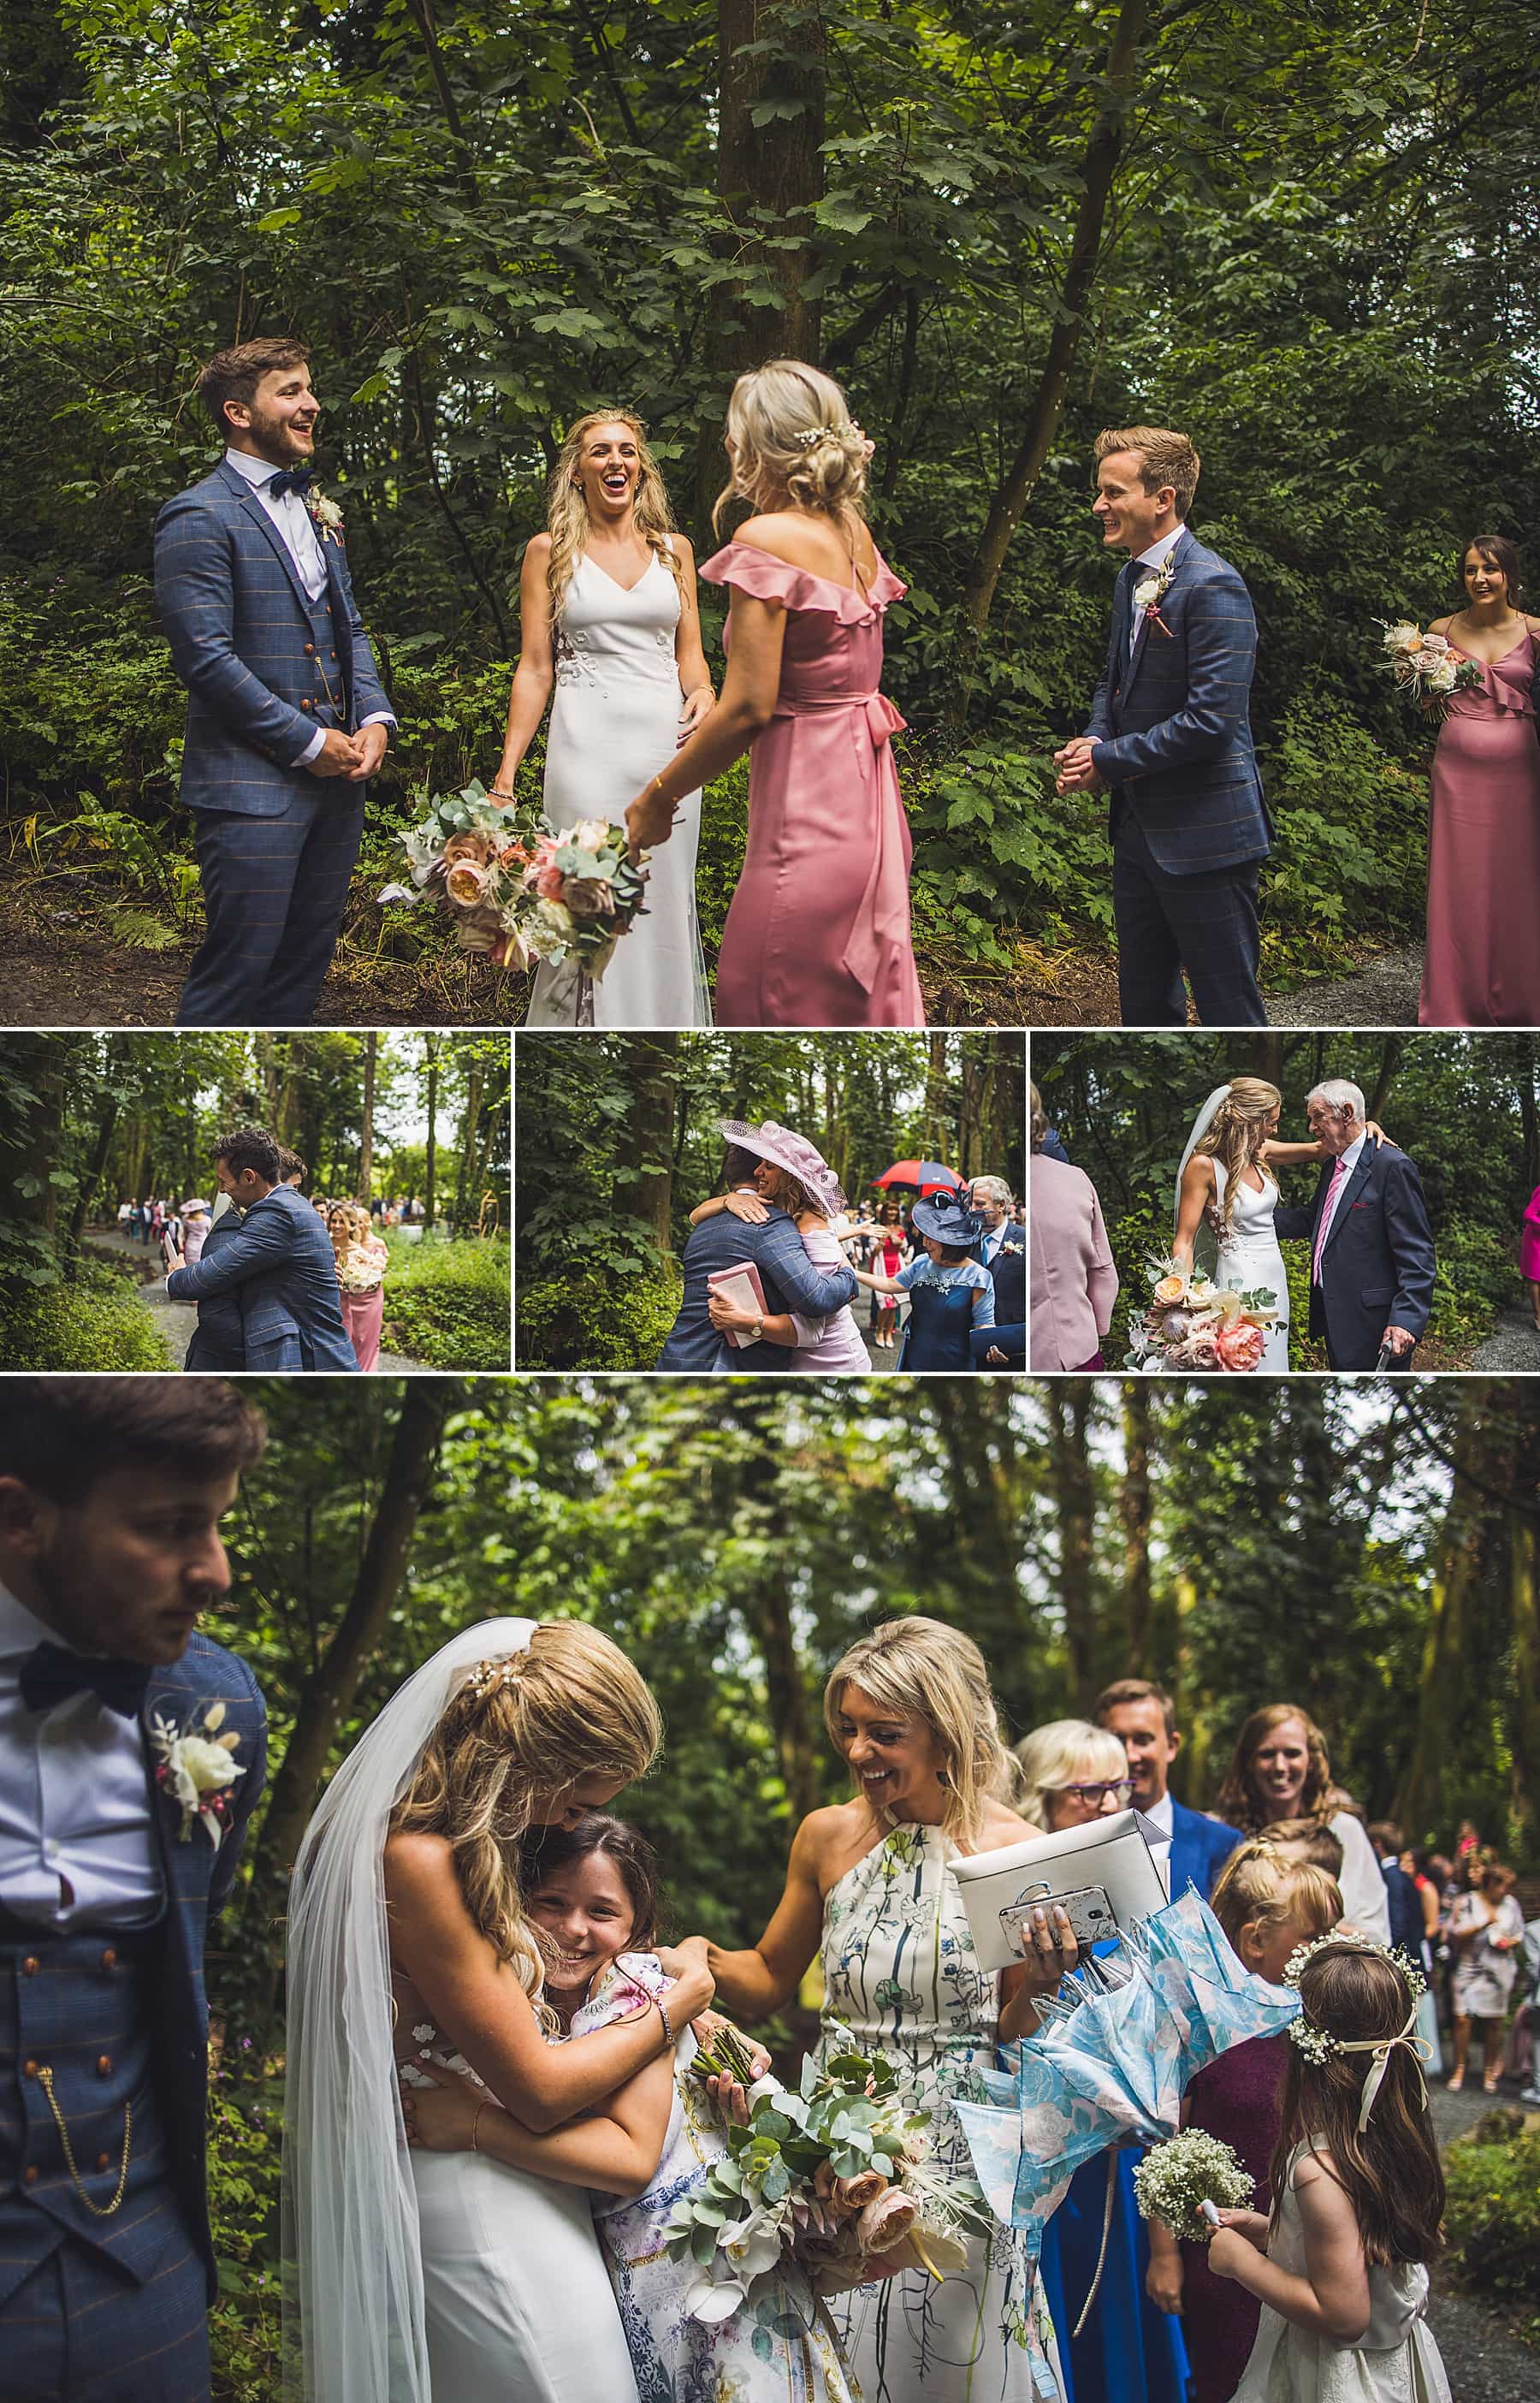 Ballyscullion Park Wedding,Northern Ireland Wedding Photographer,Navyblur Photography,